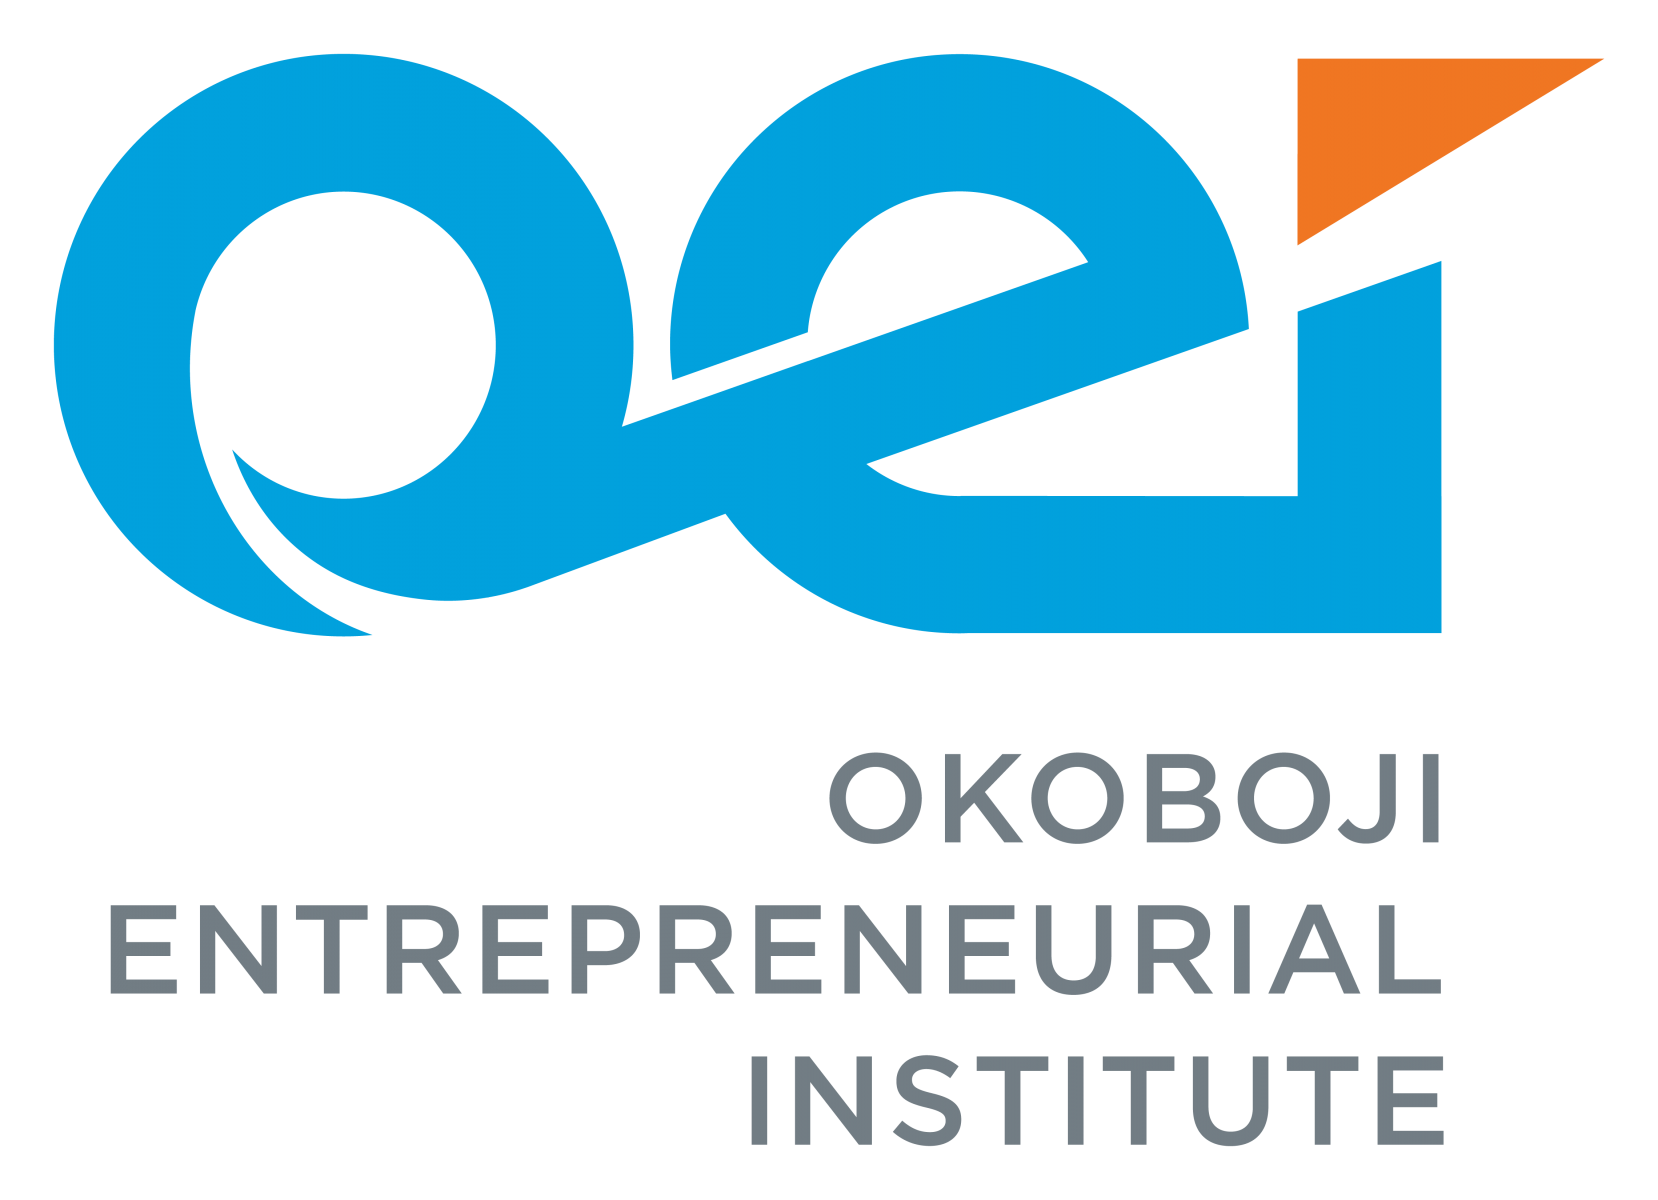 Okoboji Entrepreneurial Institute Photo - Click Here to See